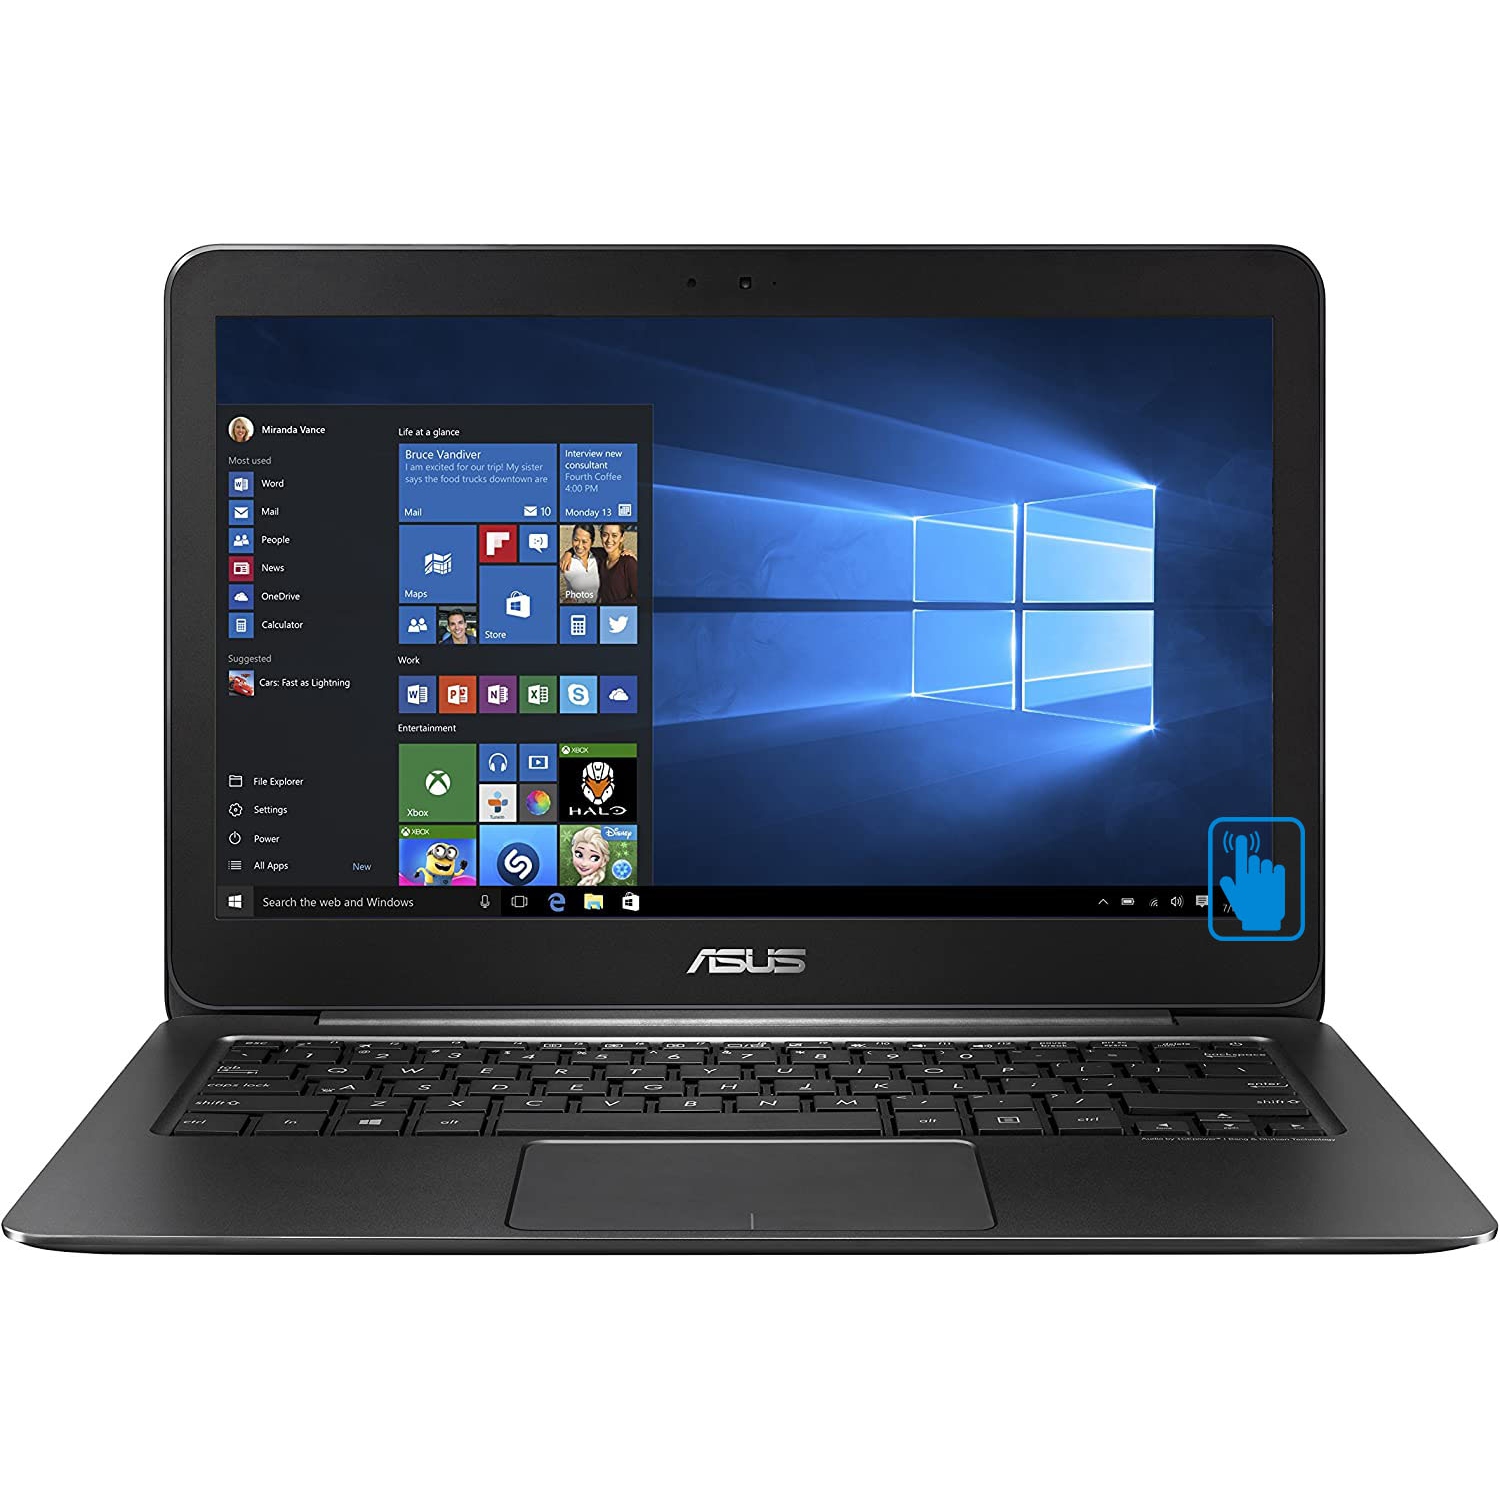 Custom ASUS ZenBook Signature Edition Laptop (Intel M3-6Y30, 8GB RAM, 512GB m.2 SATA SSD, Intel HD 515, 13.3" Win 10 Home)